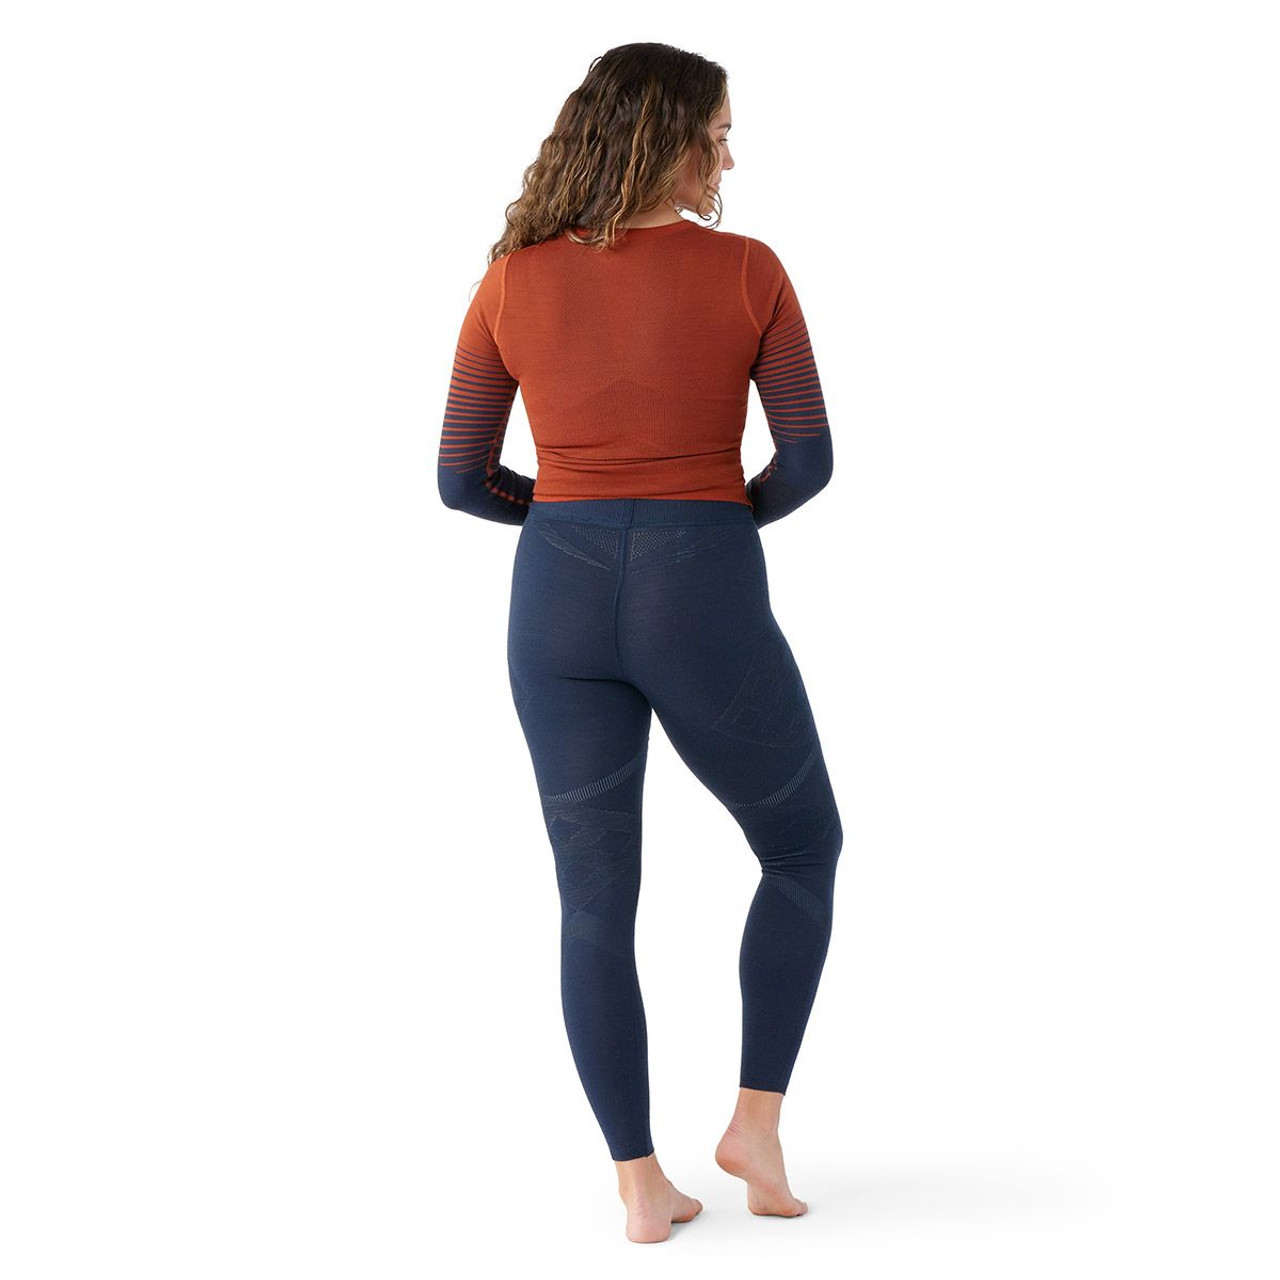 Smartwool - Women's Intraknit Thermal Merino Baselayer Bottom (2 colors)